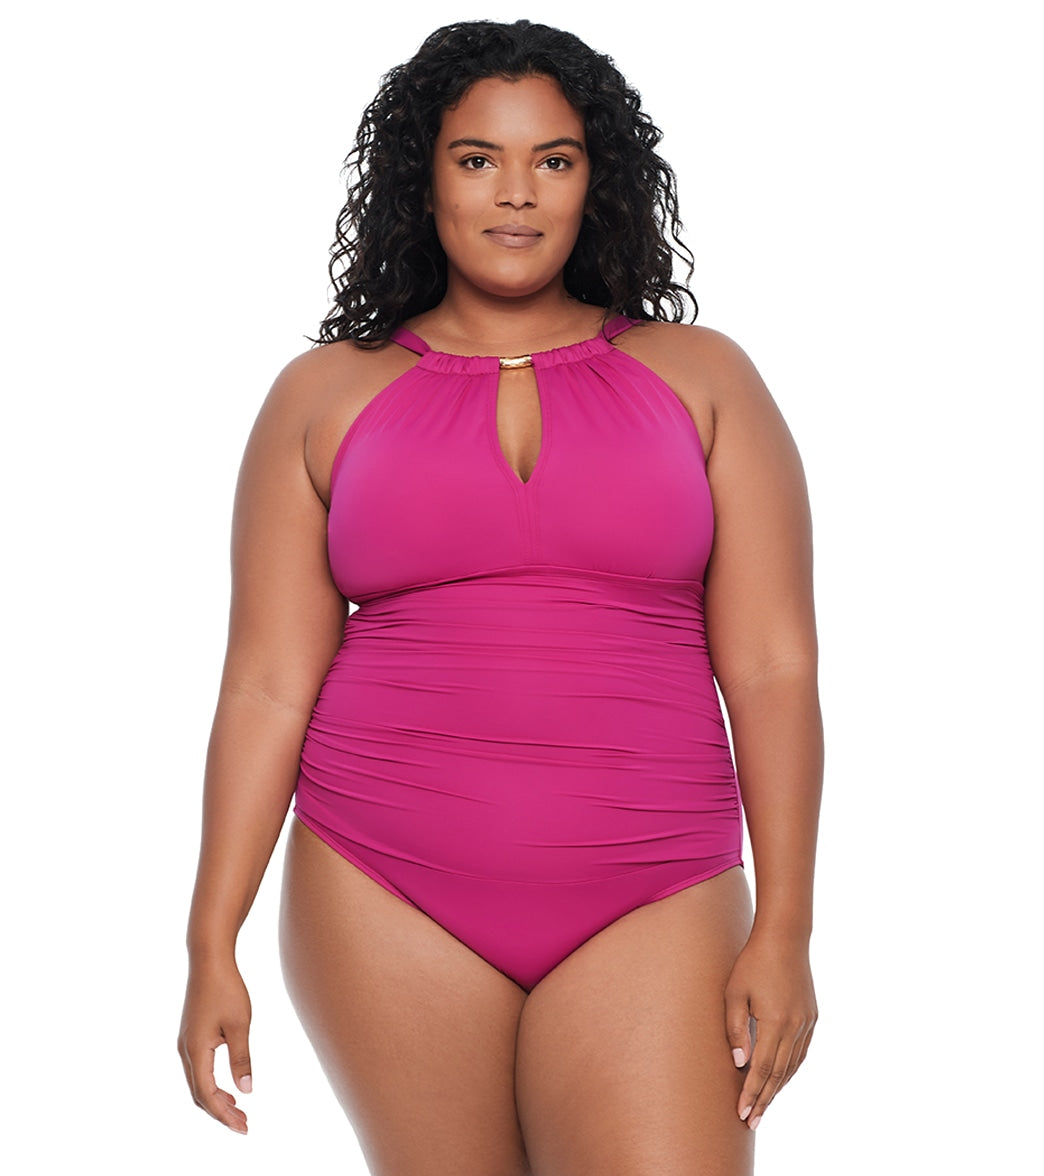 How to Choose Flattering Plus Size Swimwear - SwimOutlet.com